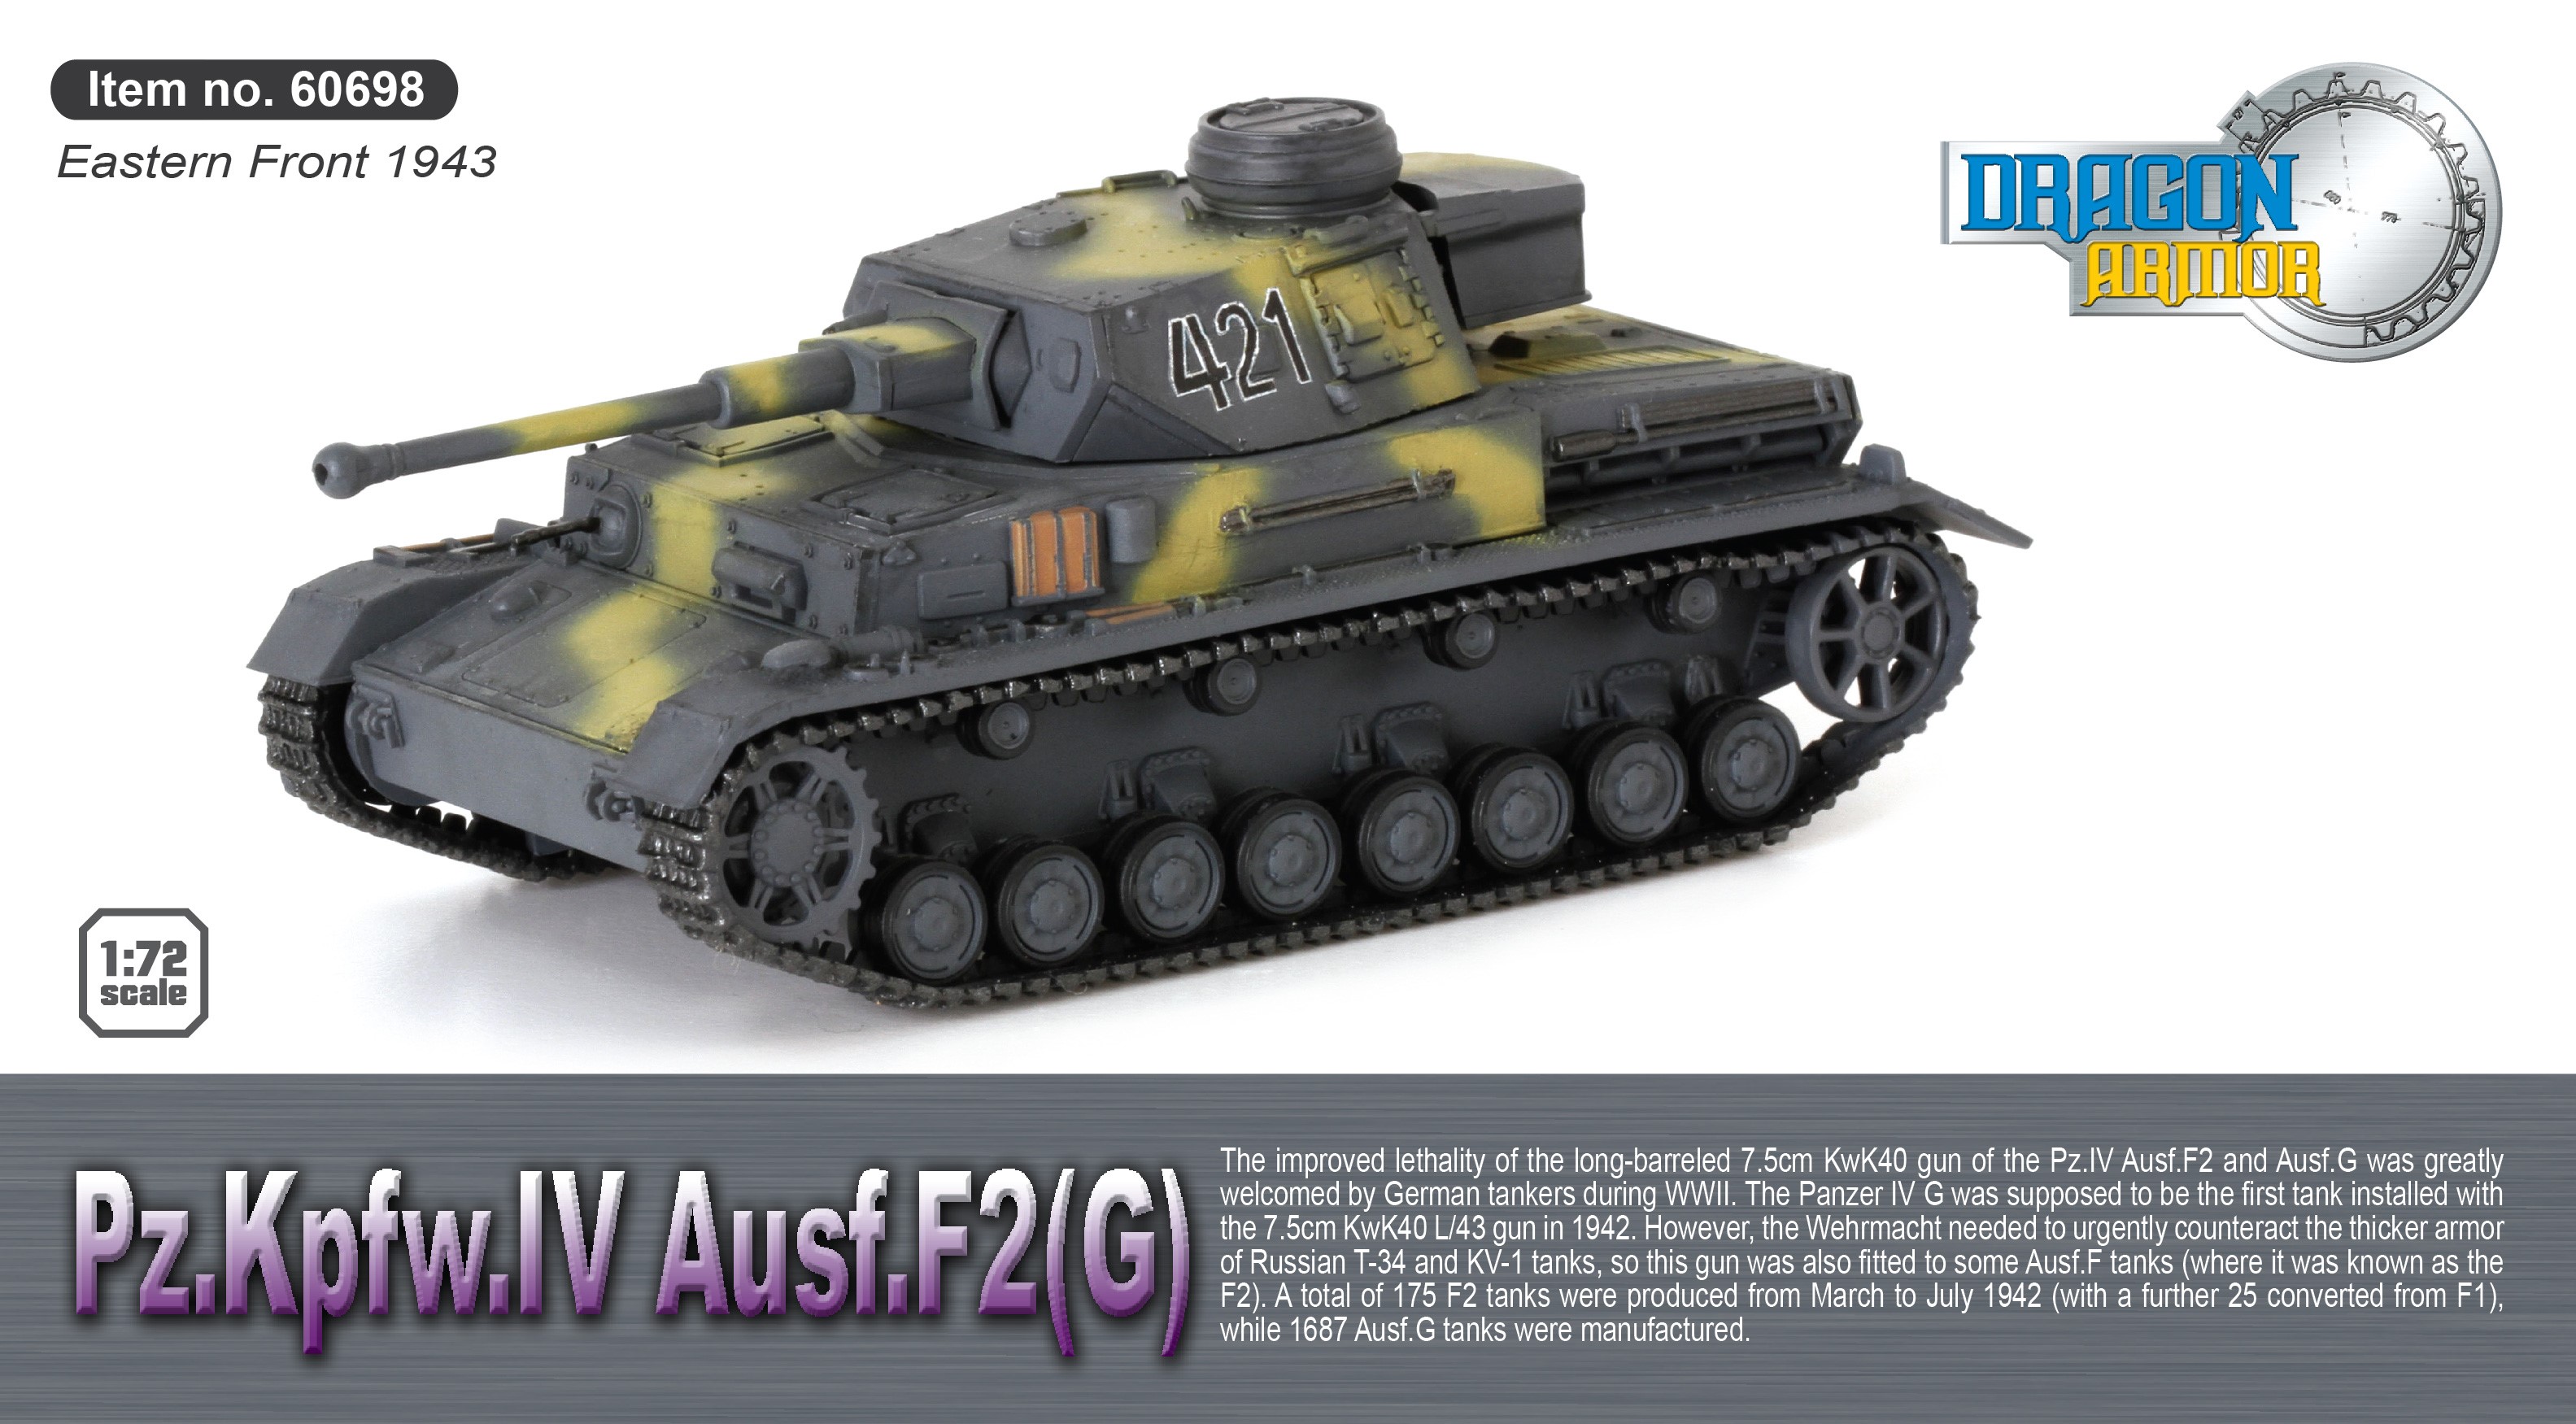 DRAGON WWII GERMAN Pz.Kpfw.IV Ausf.F1 1/72 tank model finished non diecast F 